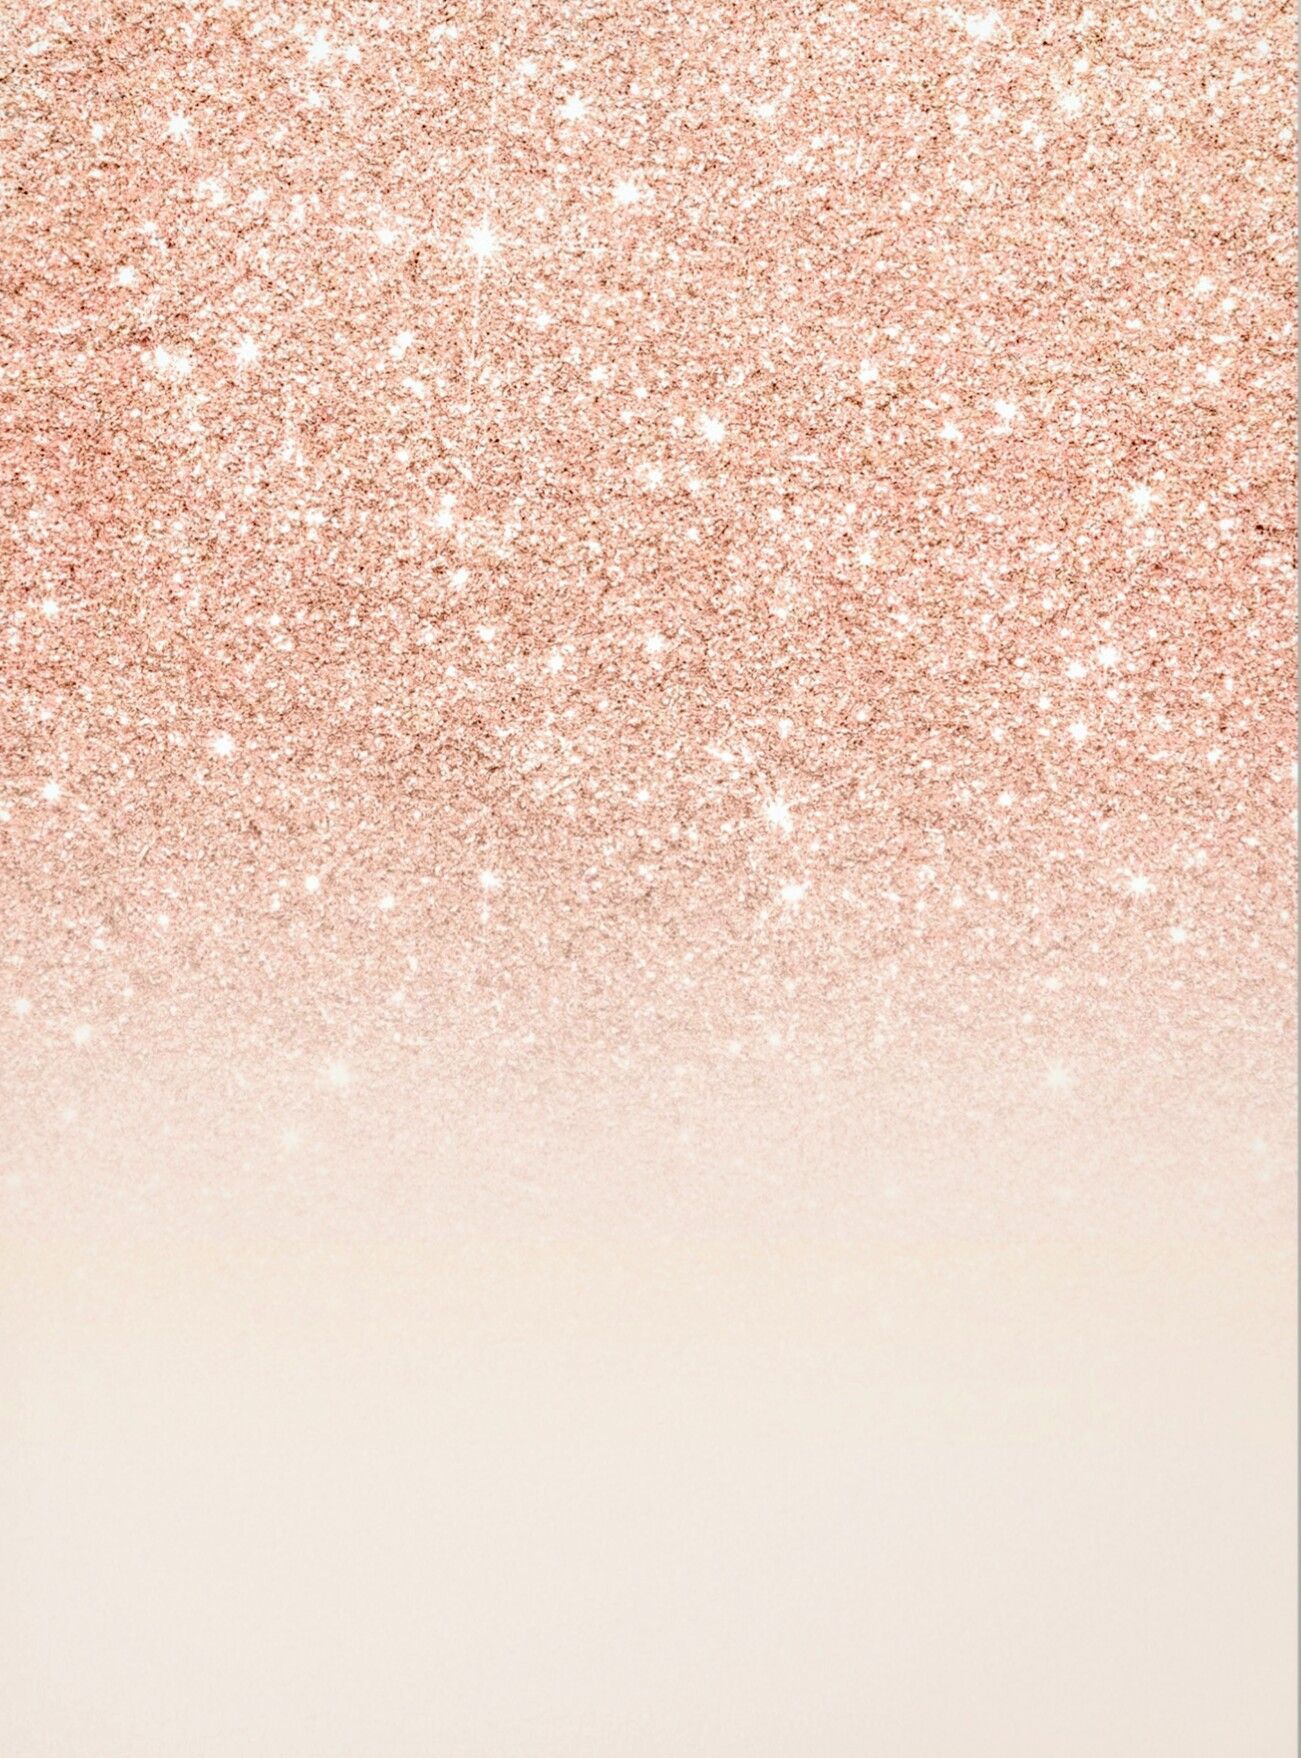  Glitzer Rosegold Hintergrundbild 1301x1758. Cute Rose Gold Glitter Wallpaper